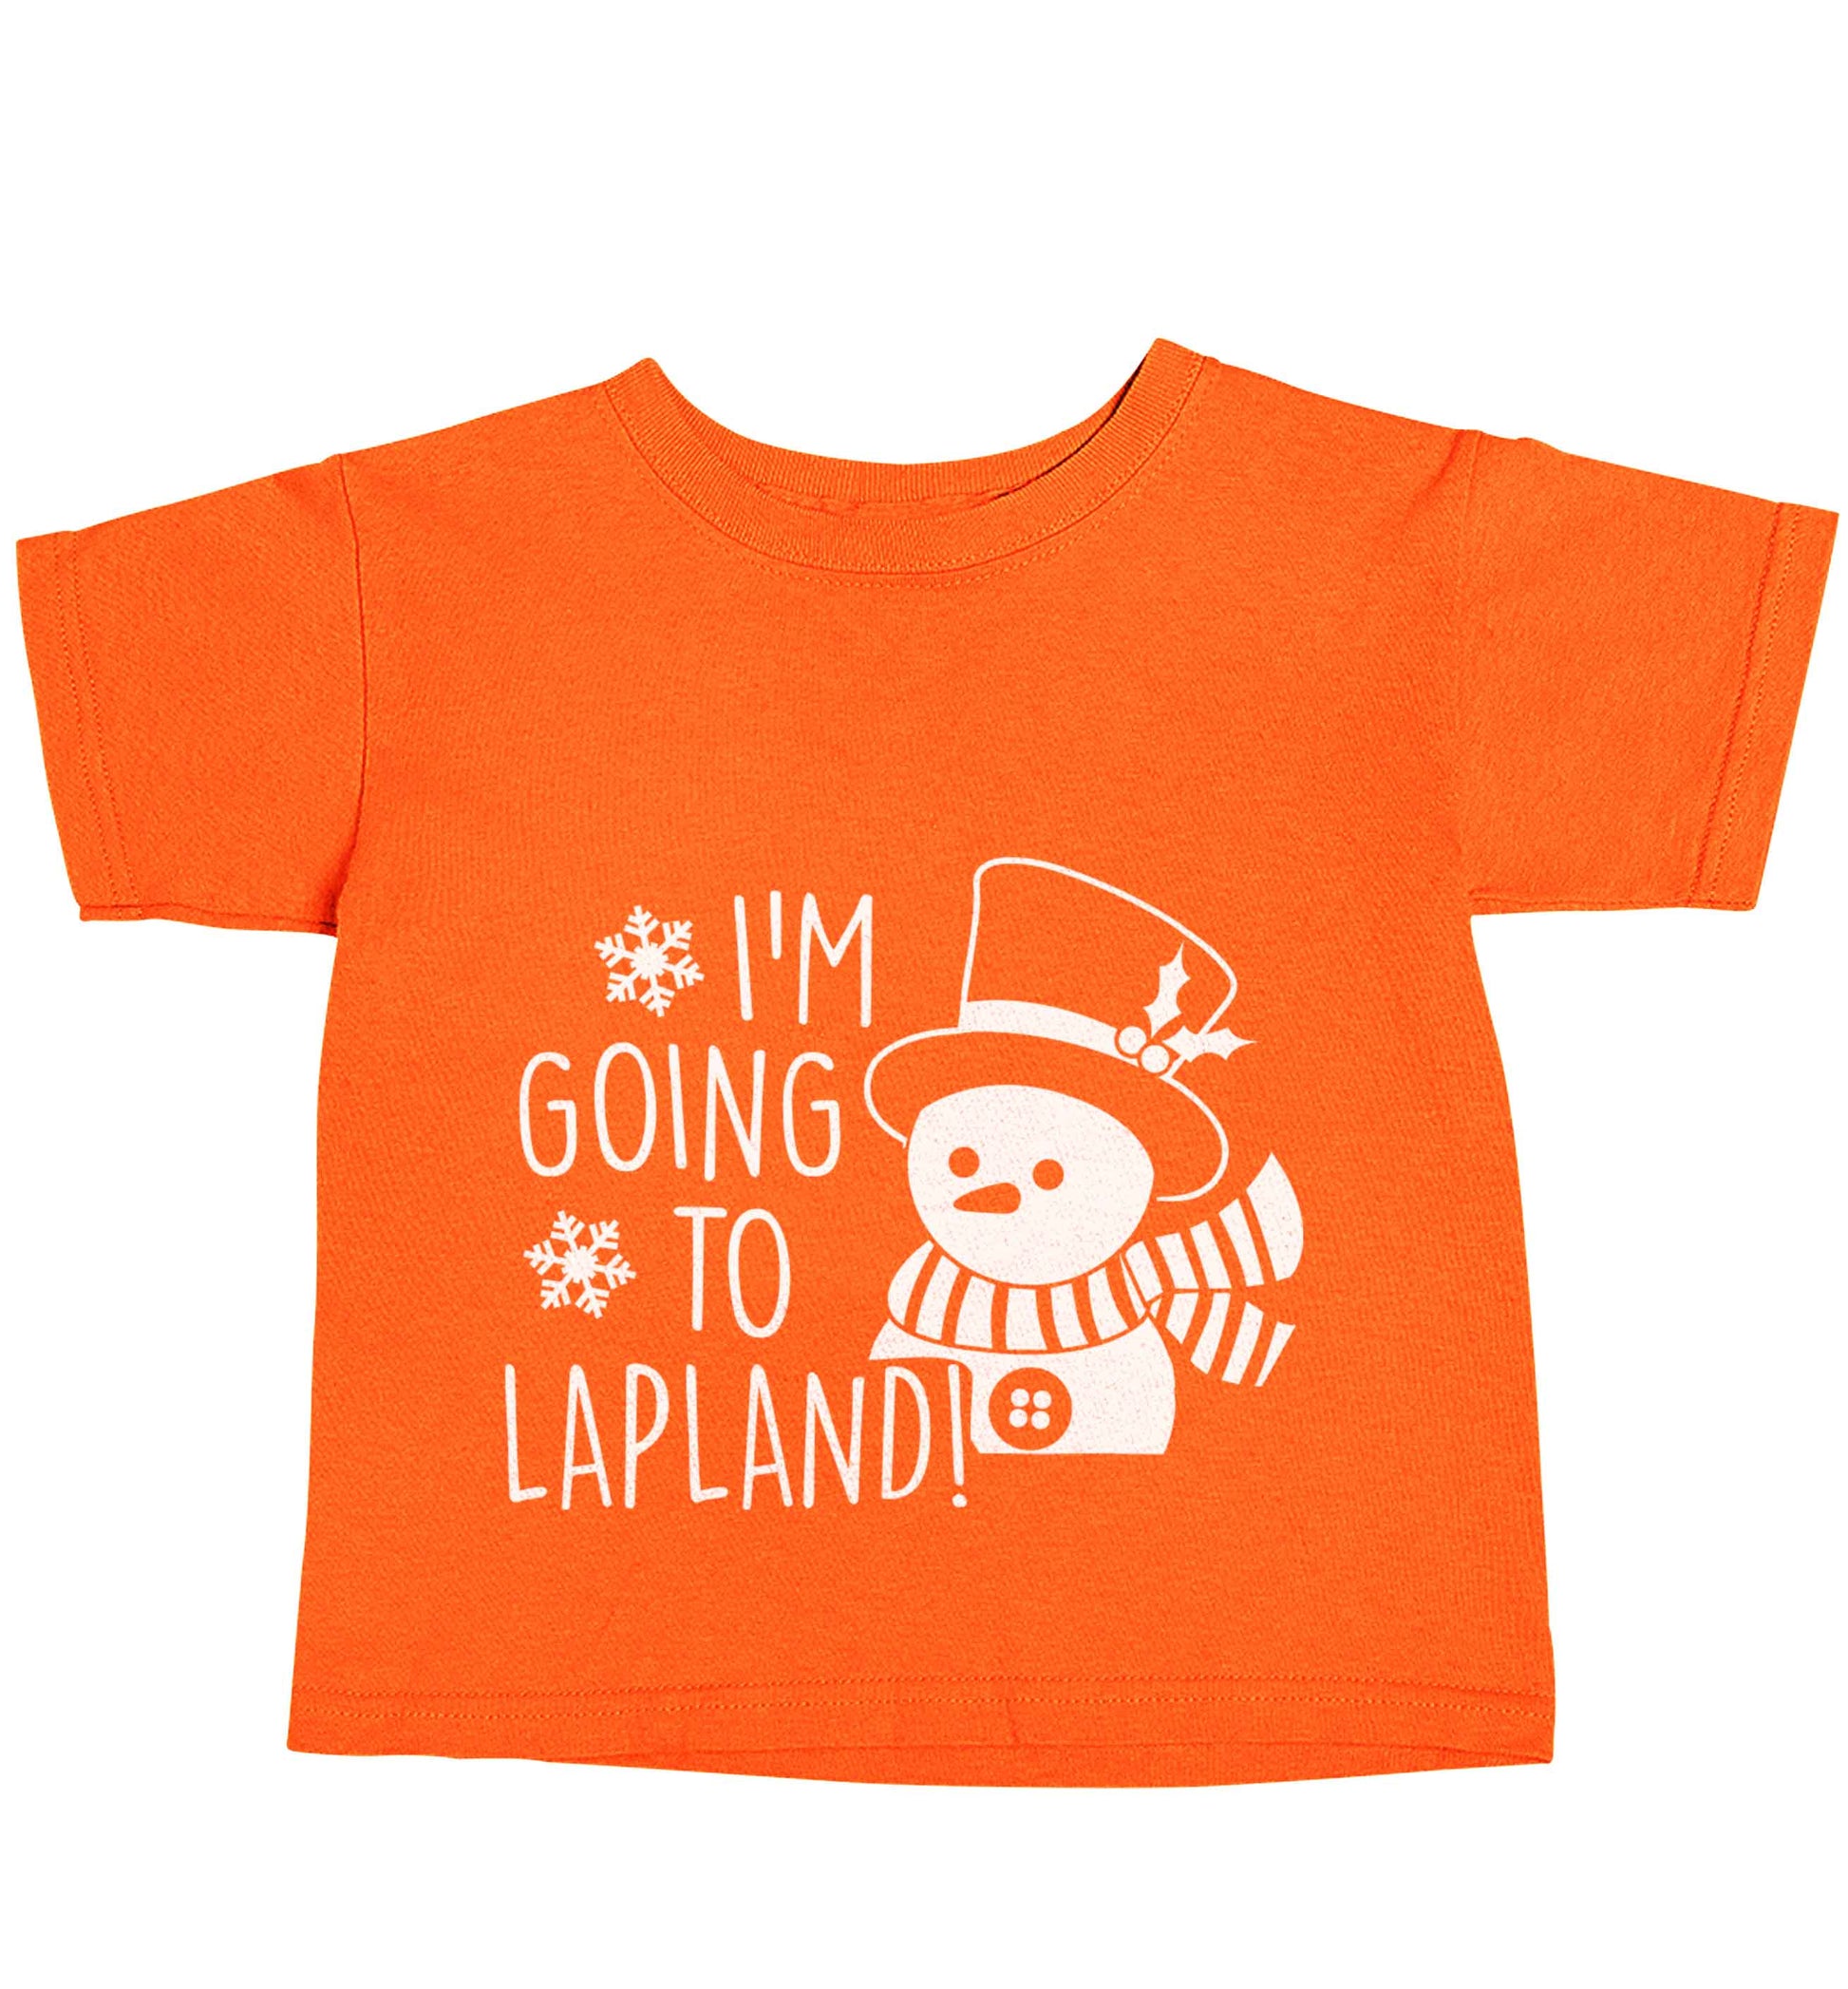 I'm going to Lapland orange baby toddler Tshirt 2 Years